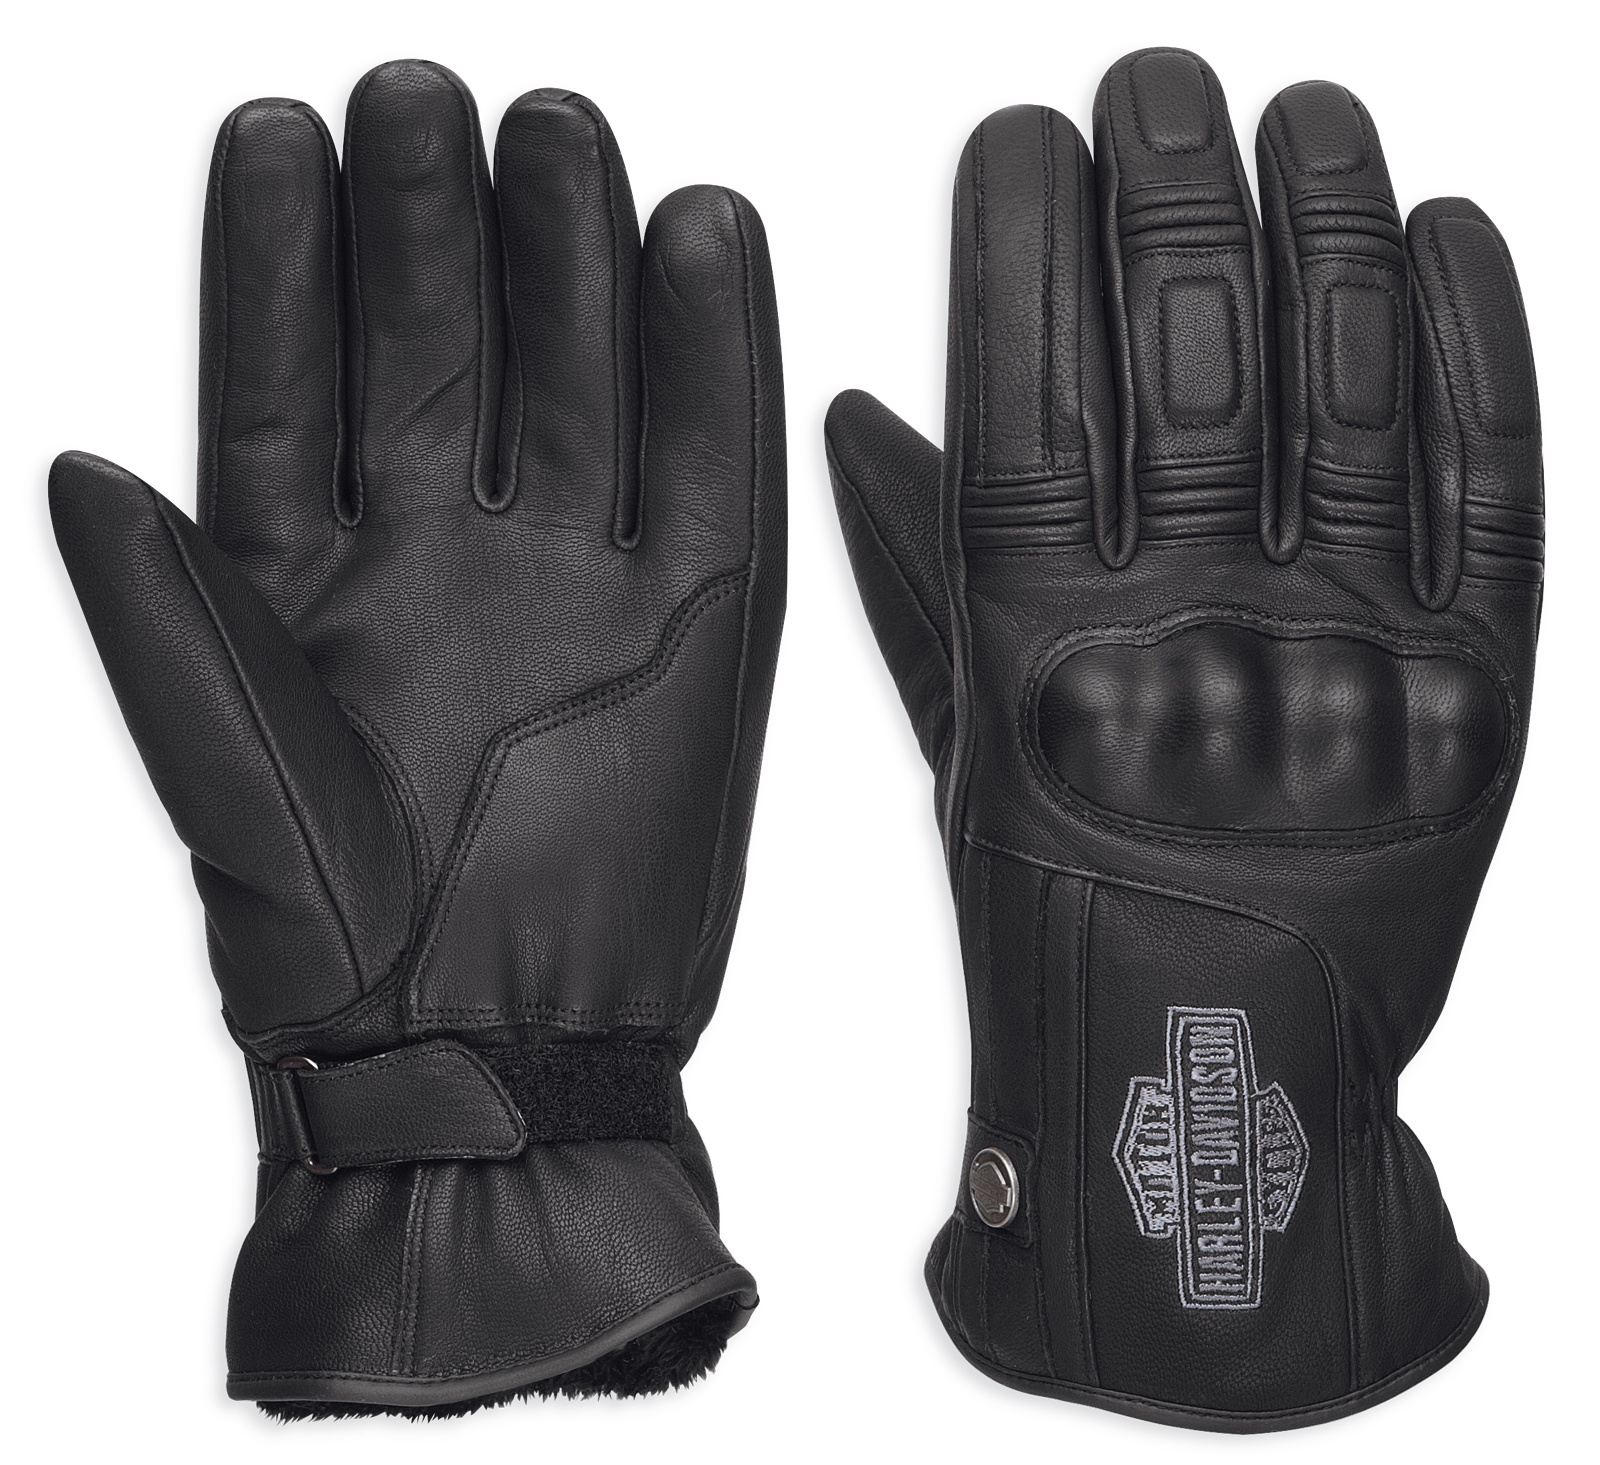 98359 17em Harley Davidson Urban Leather Gloves Ec Black At Thunderbike Shop